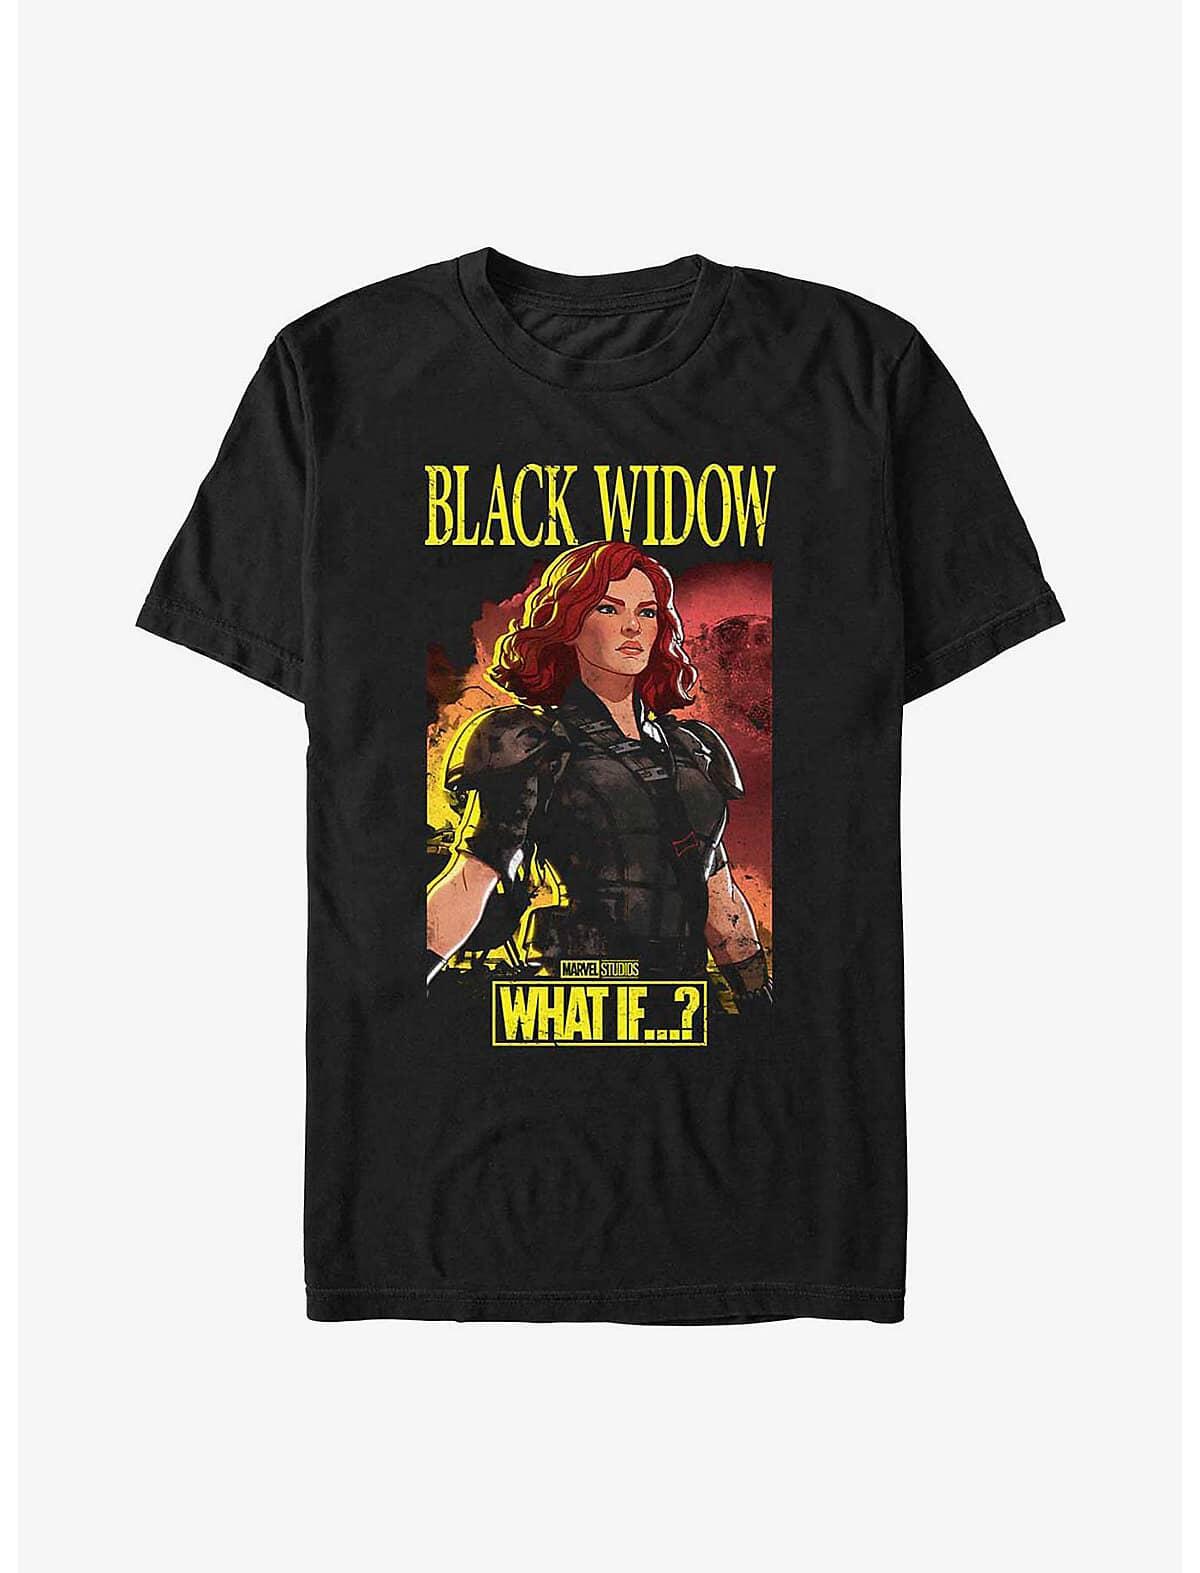 lack Widow Apocalyptic Suit T-Shirt